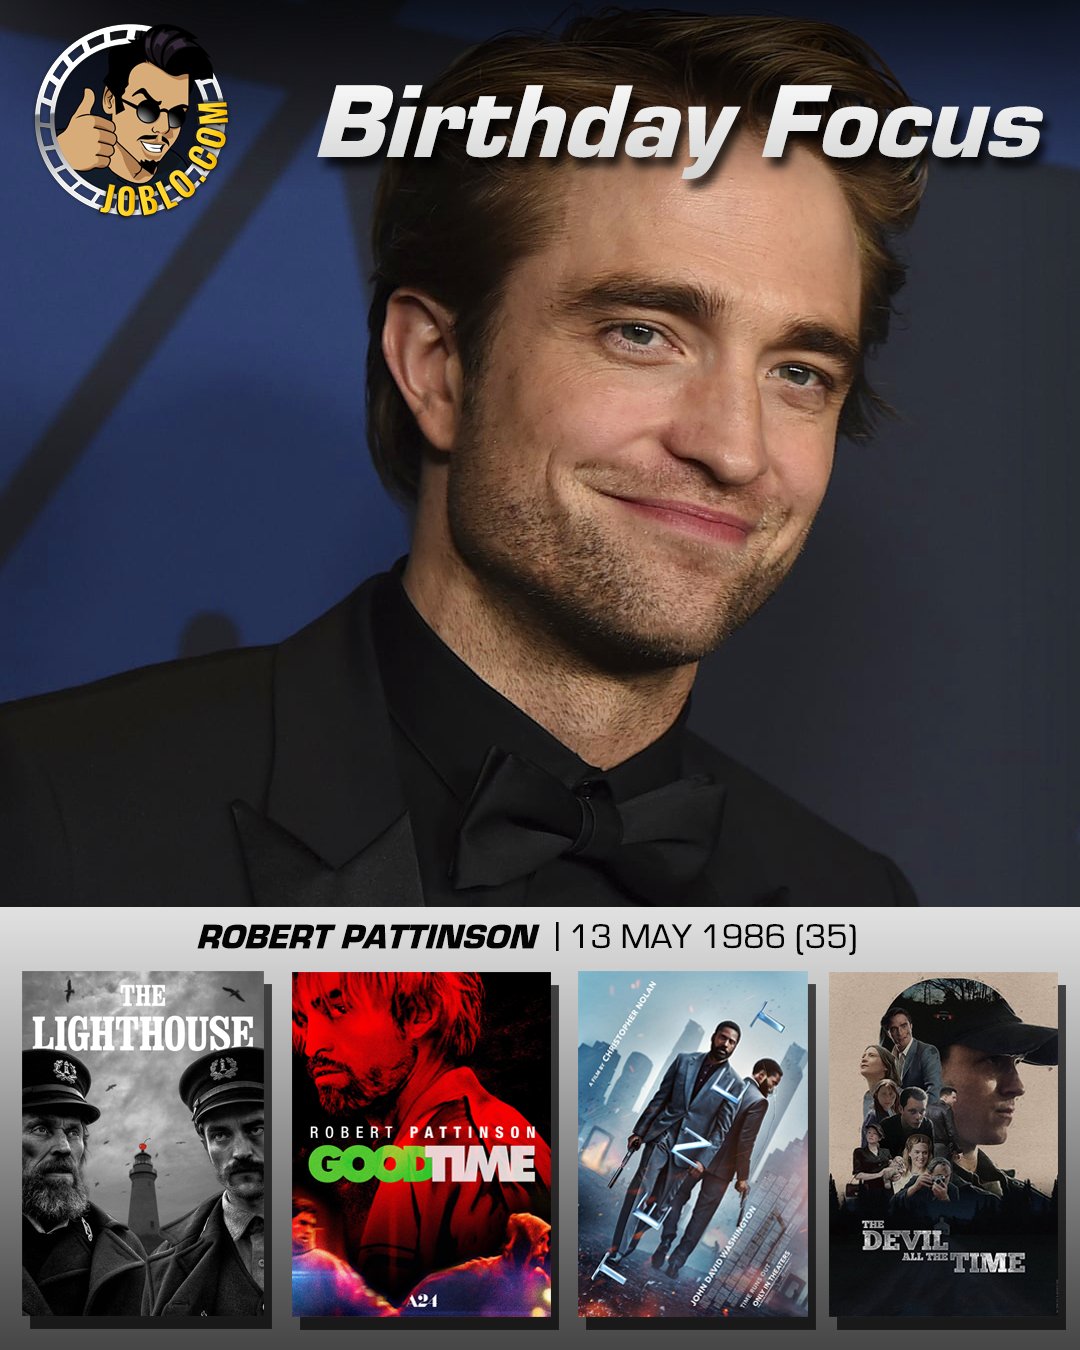 Wishing Robert Pattinson a very happy 35th birthday! 